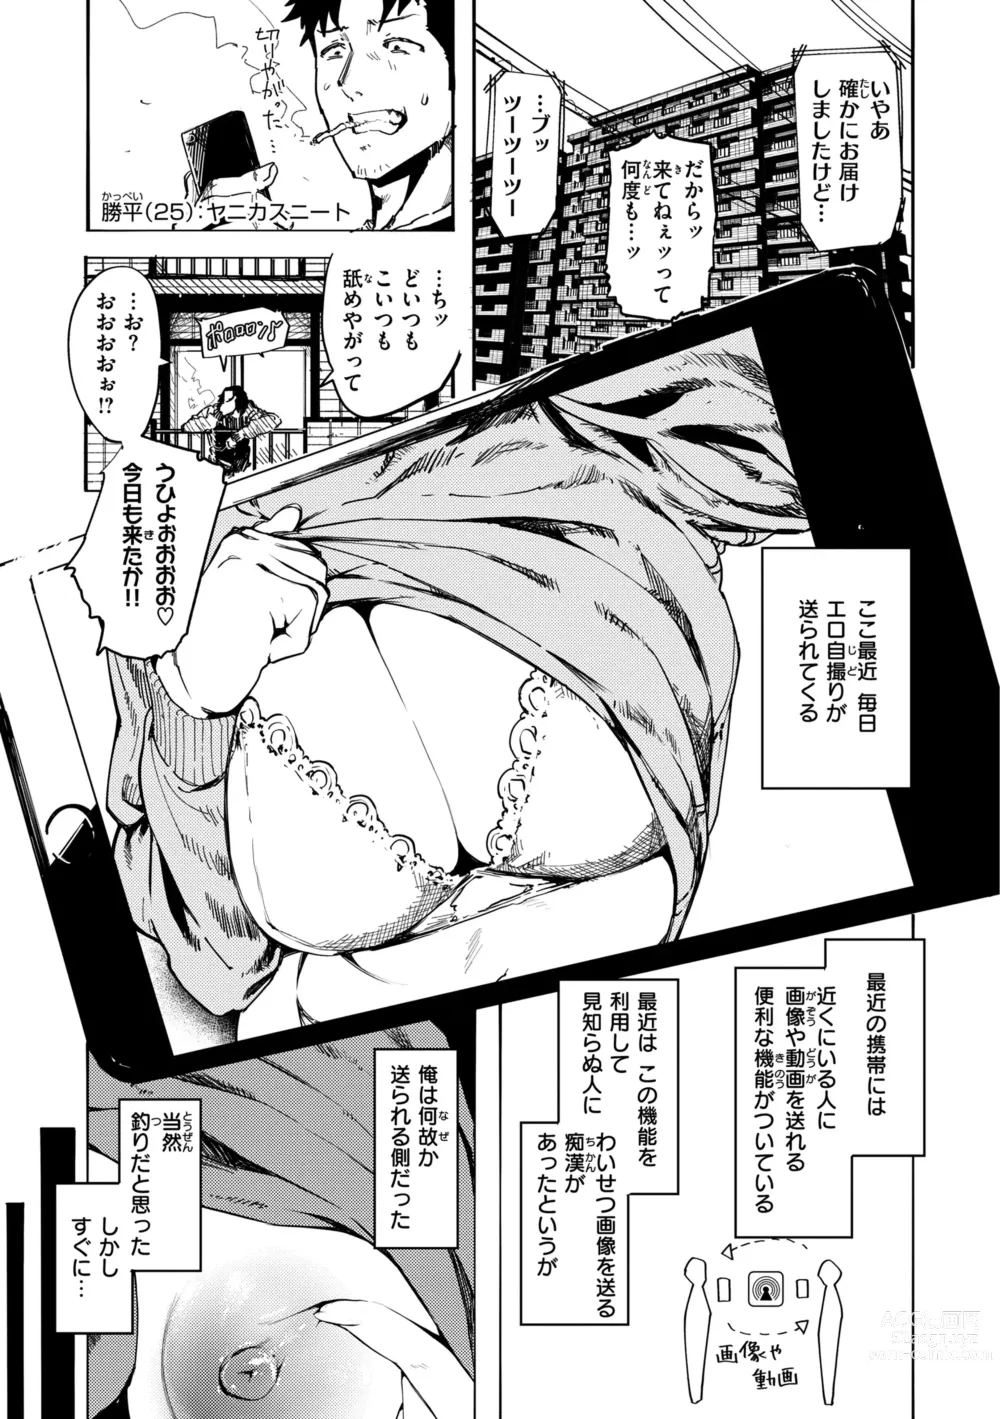 Page 5 of manga OHO-goe no Hibiku Machi - OHO voice echoes in the town♥